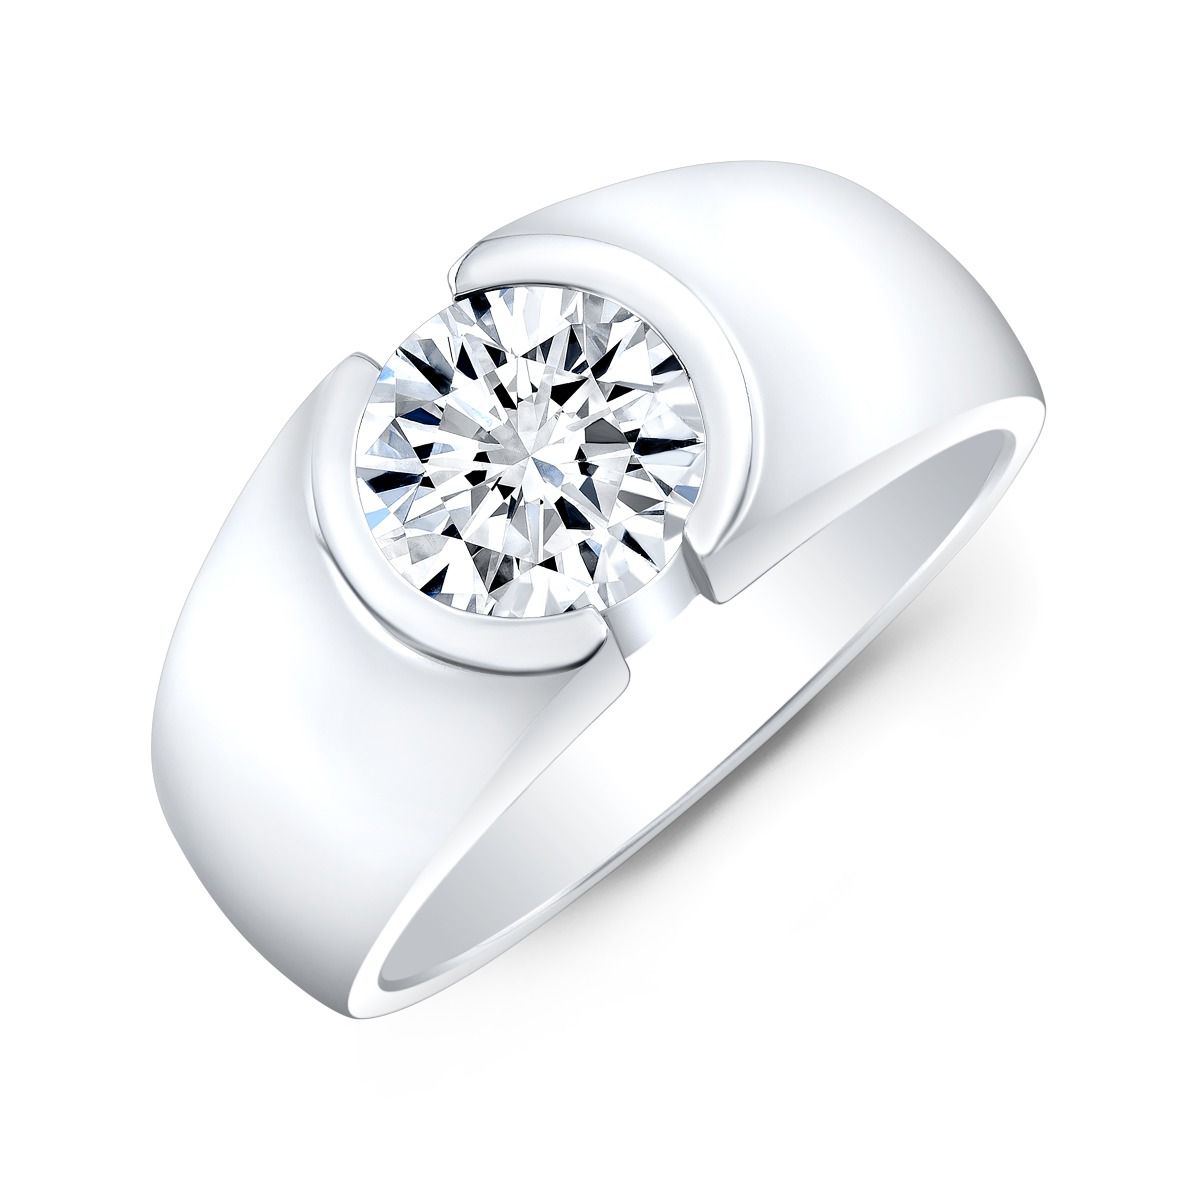 Incredible Men's Diamond & Platinum Ring | 1stdibs.com | Rings for men, Men's  jewelry rings, Men diamond ring